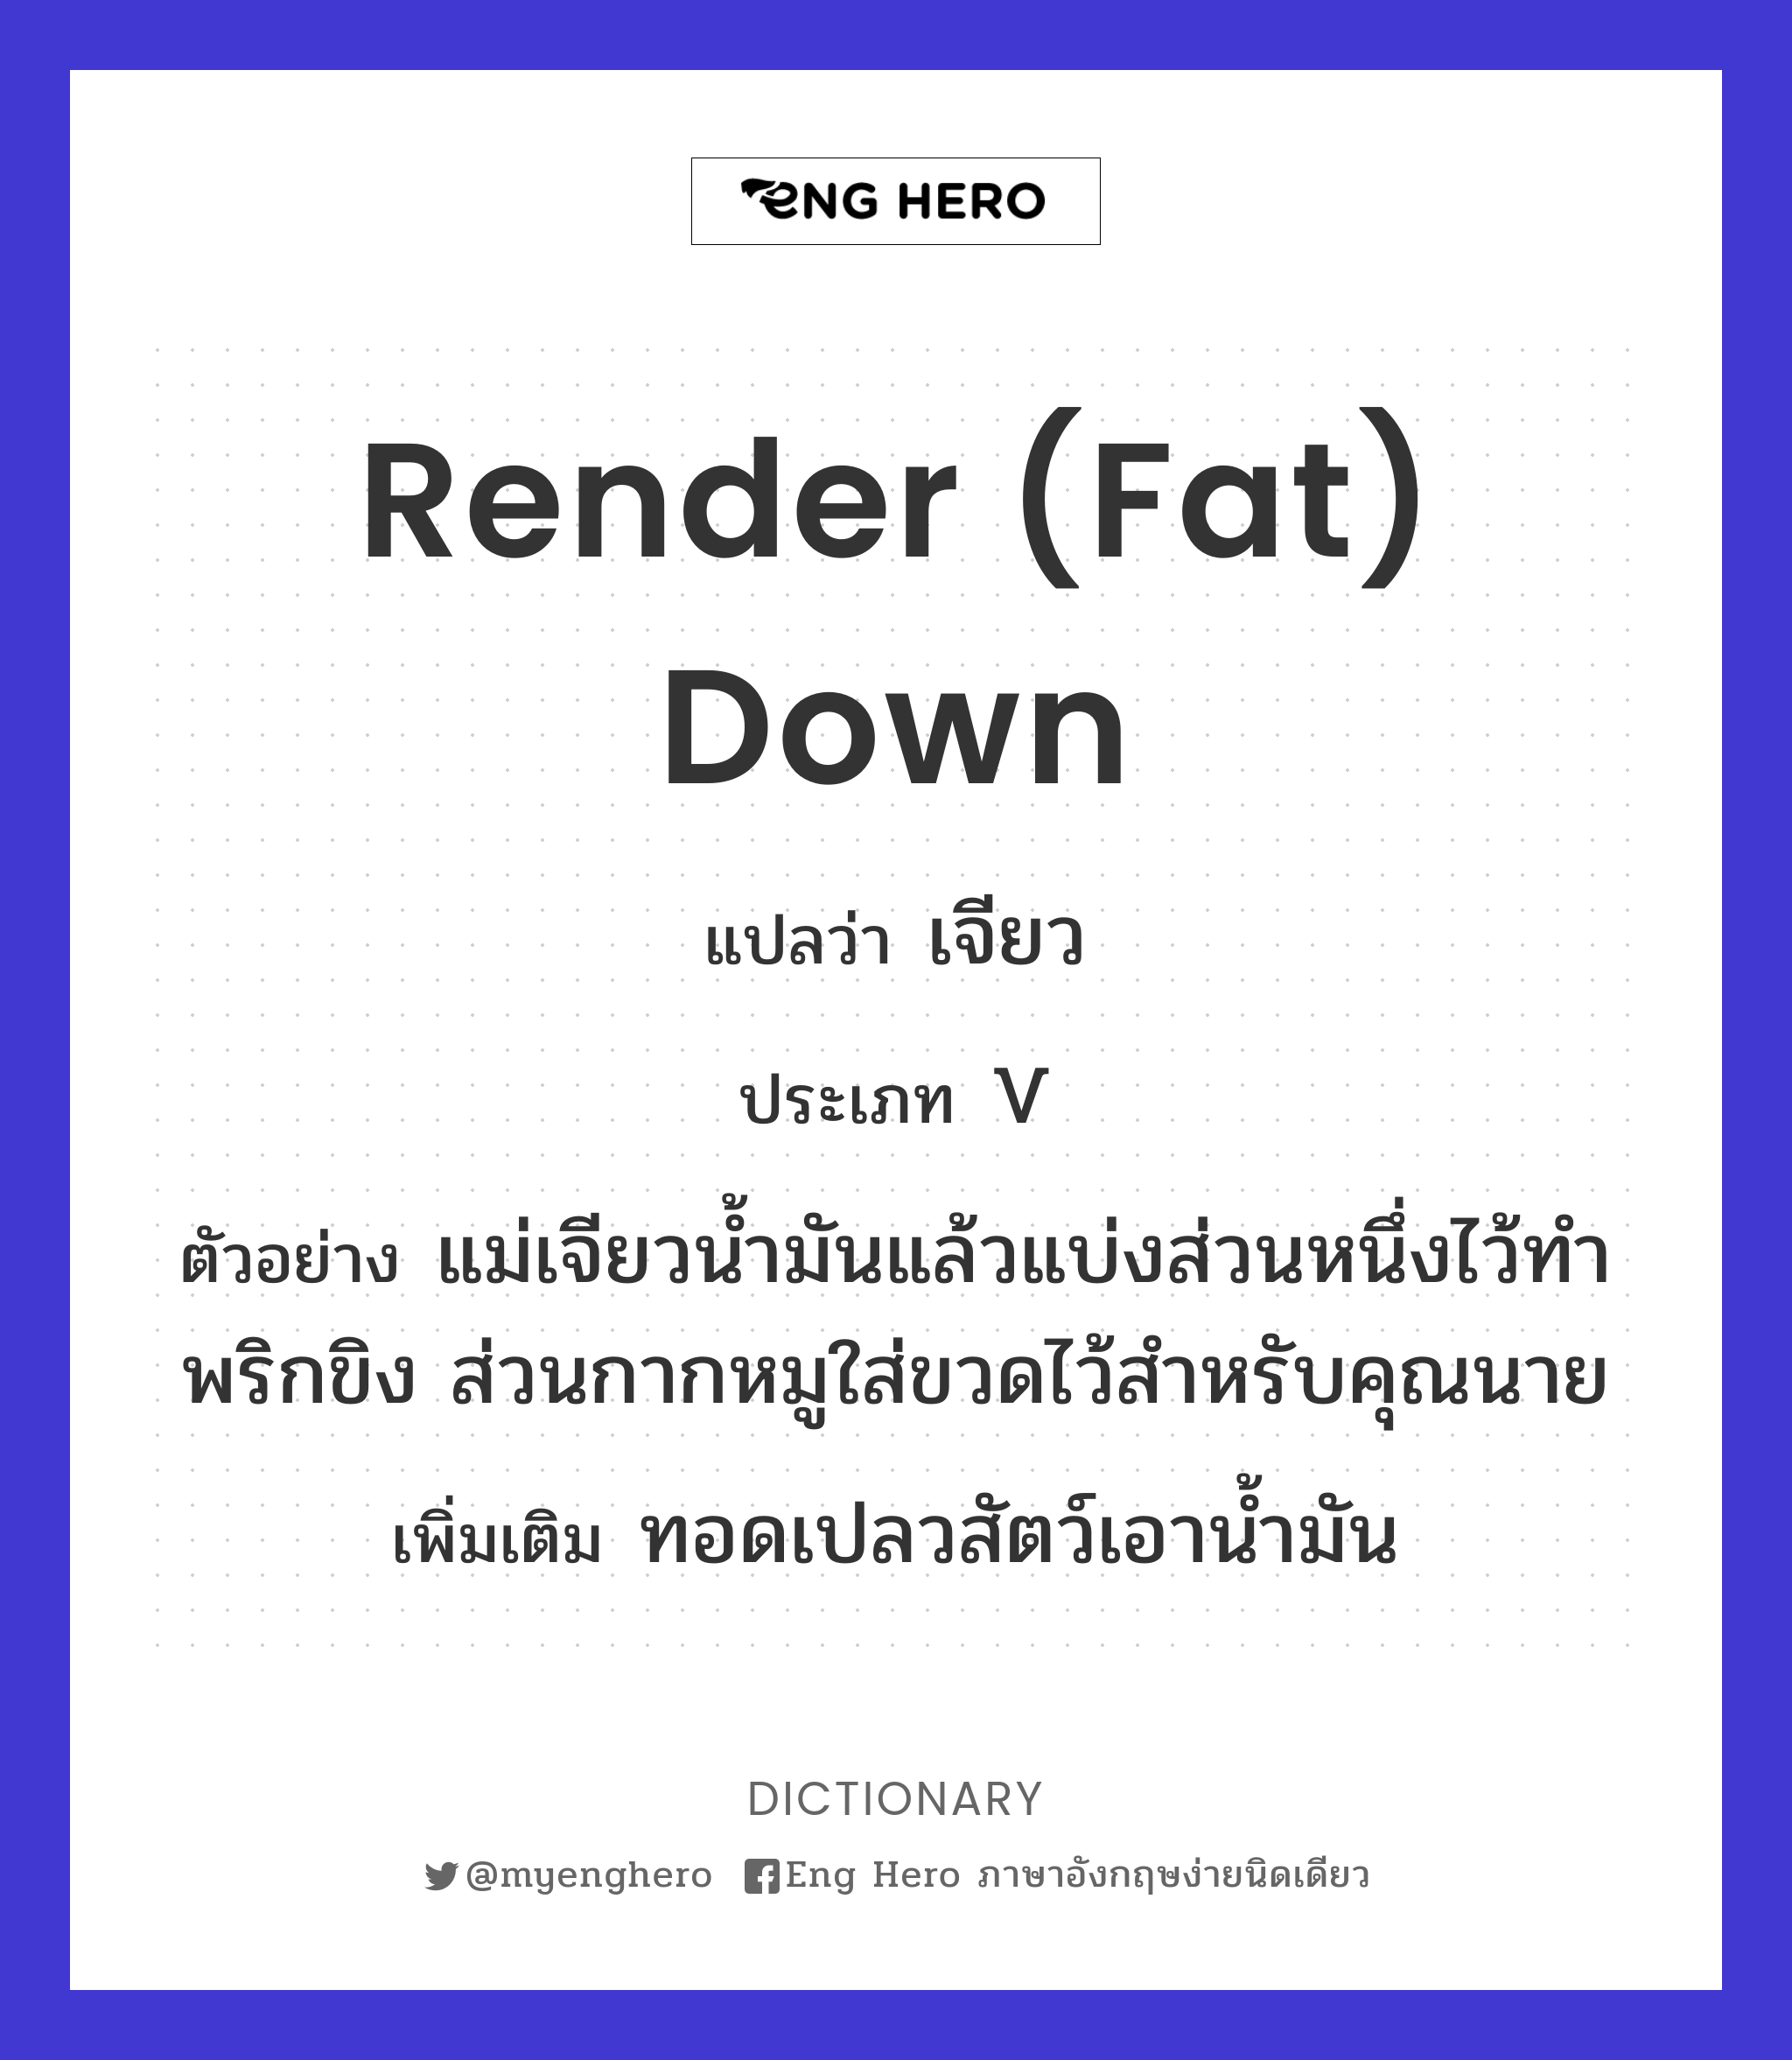 render (fat) down